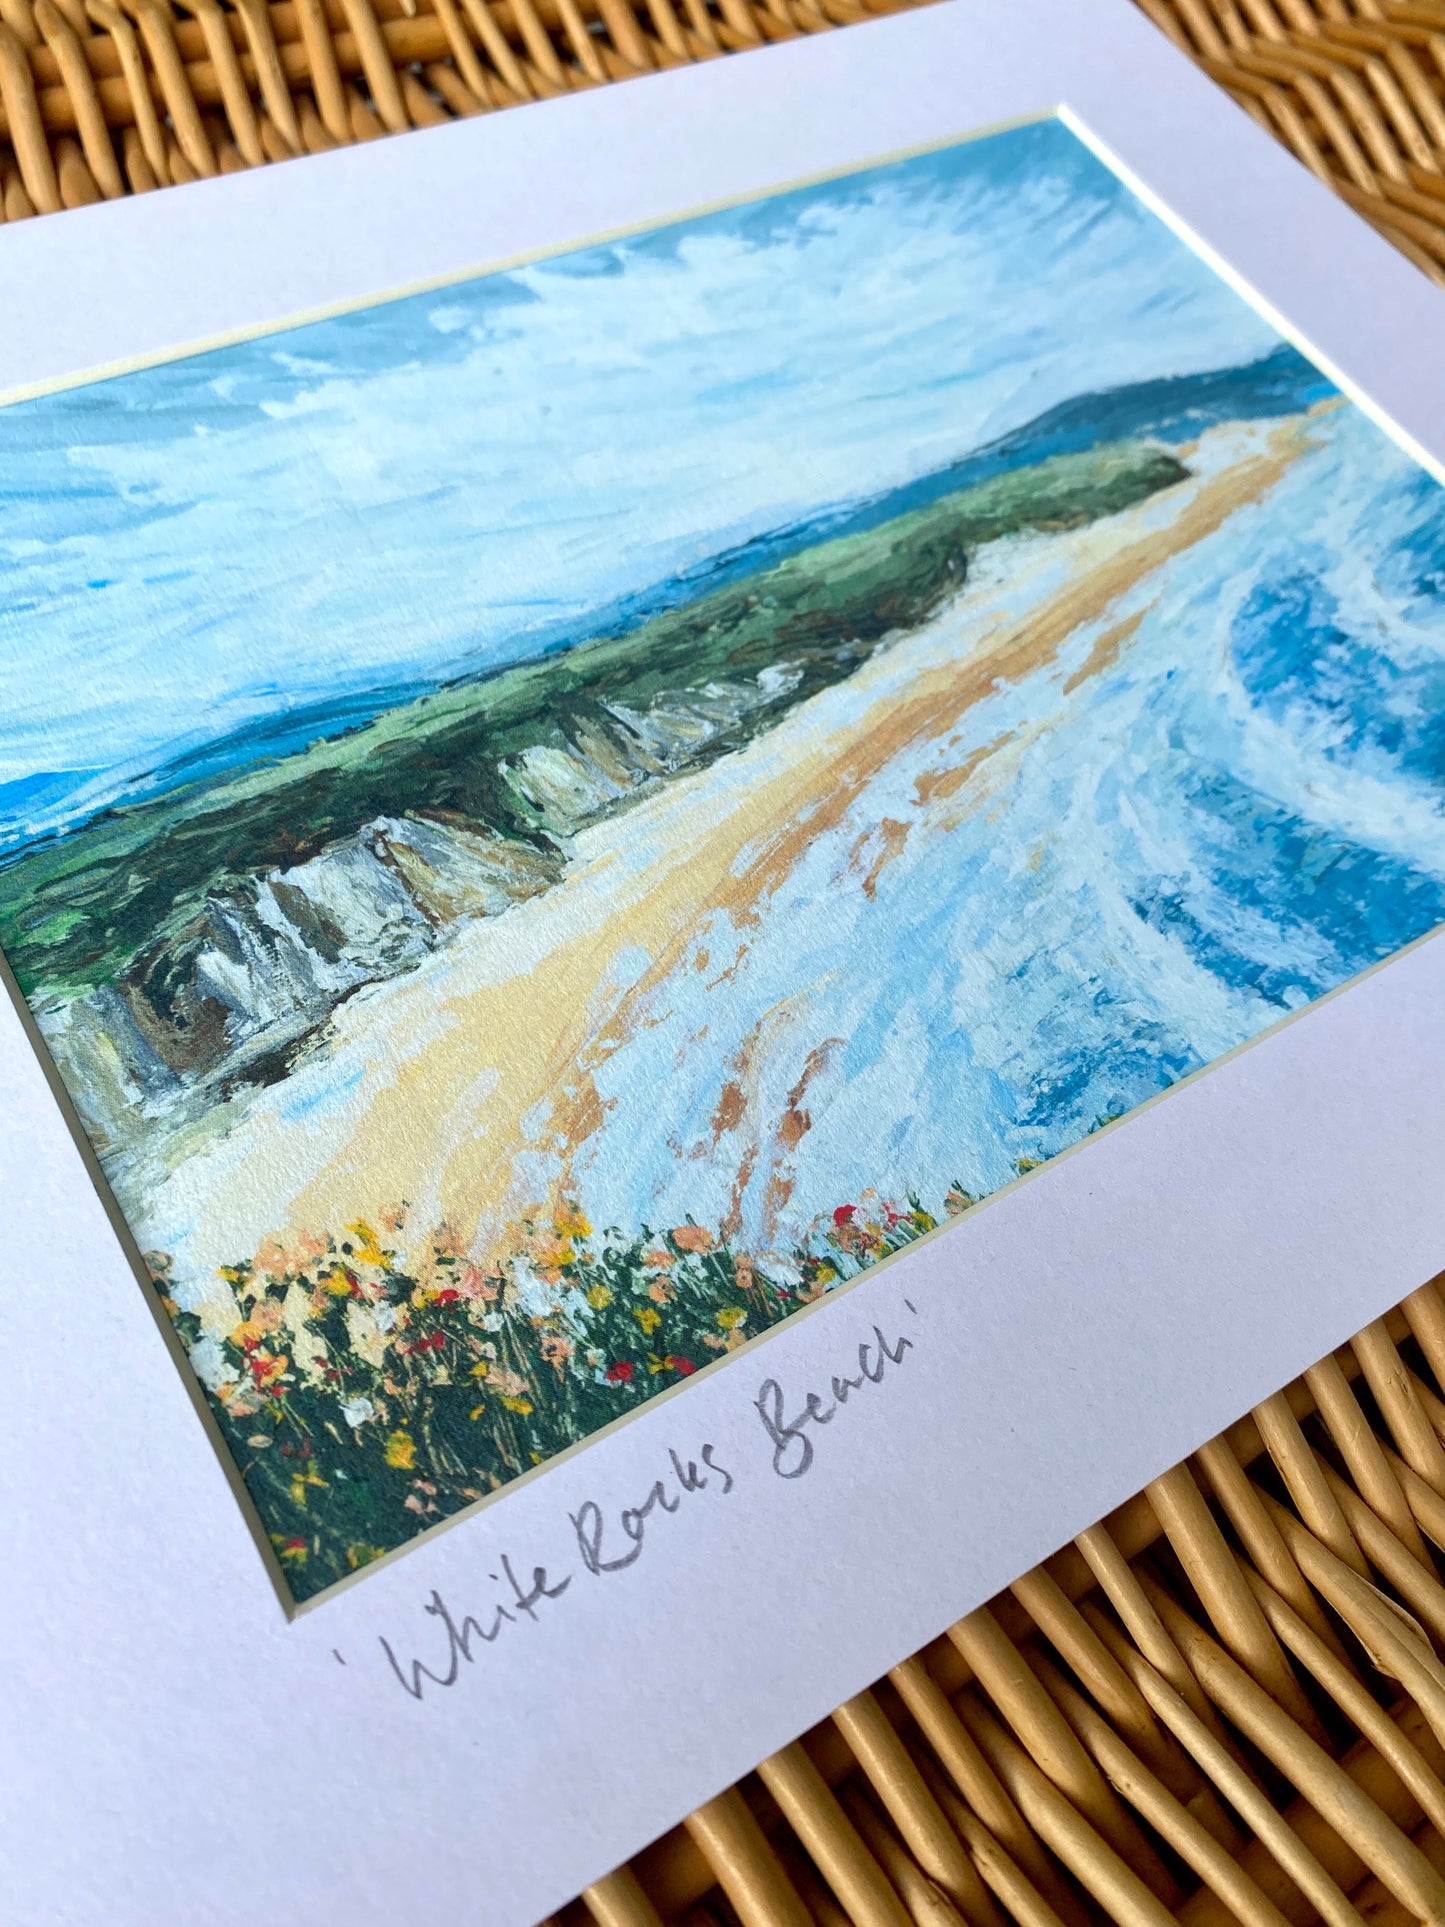 'Whiterocks Beach' Limited Edition Print